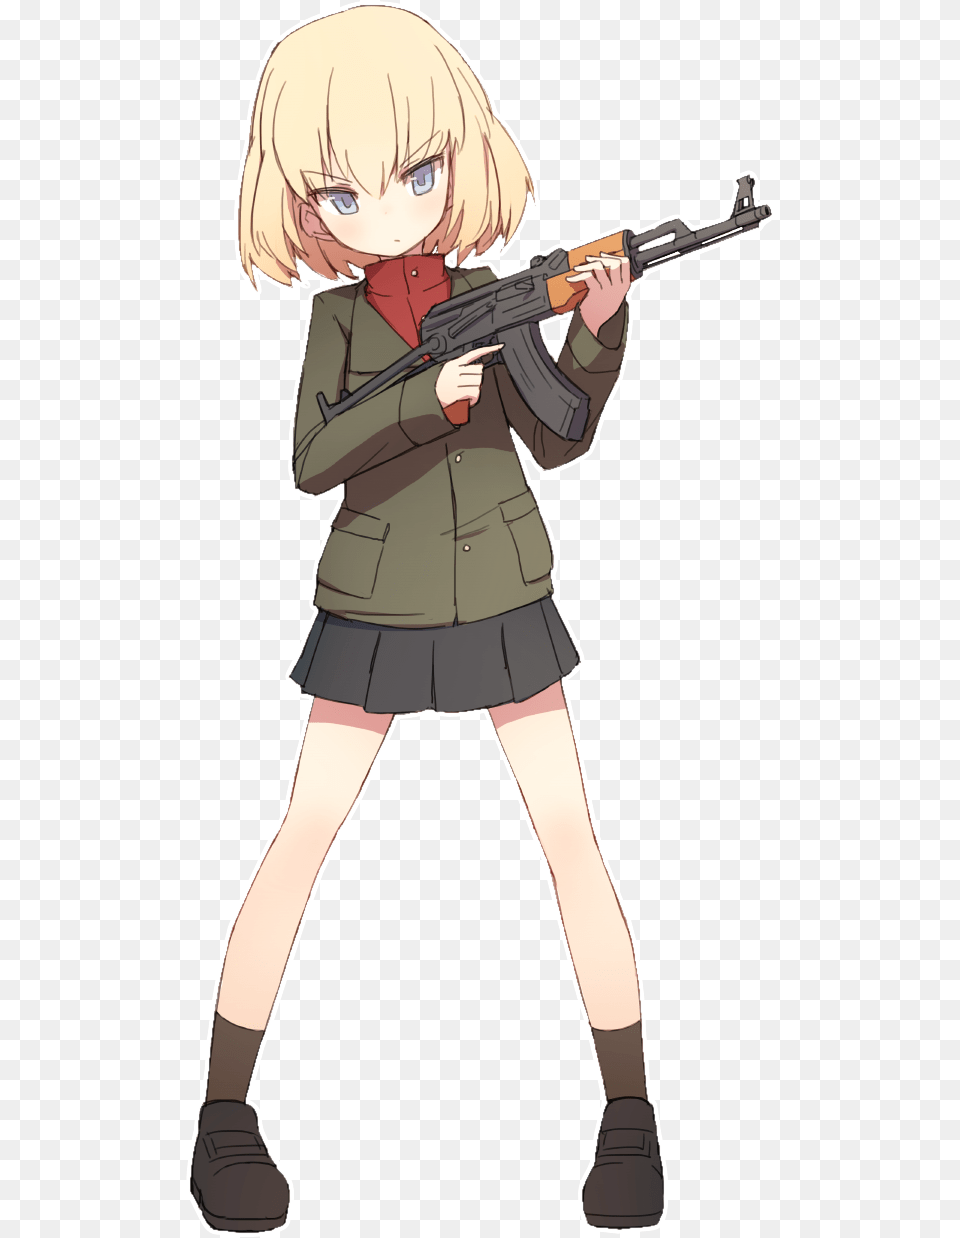 Anime Girl With Ak 47 Full Size Anime Girl With Gun, Book, Comics, Weapon, Rifle Png Image